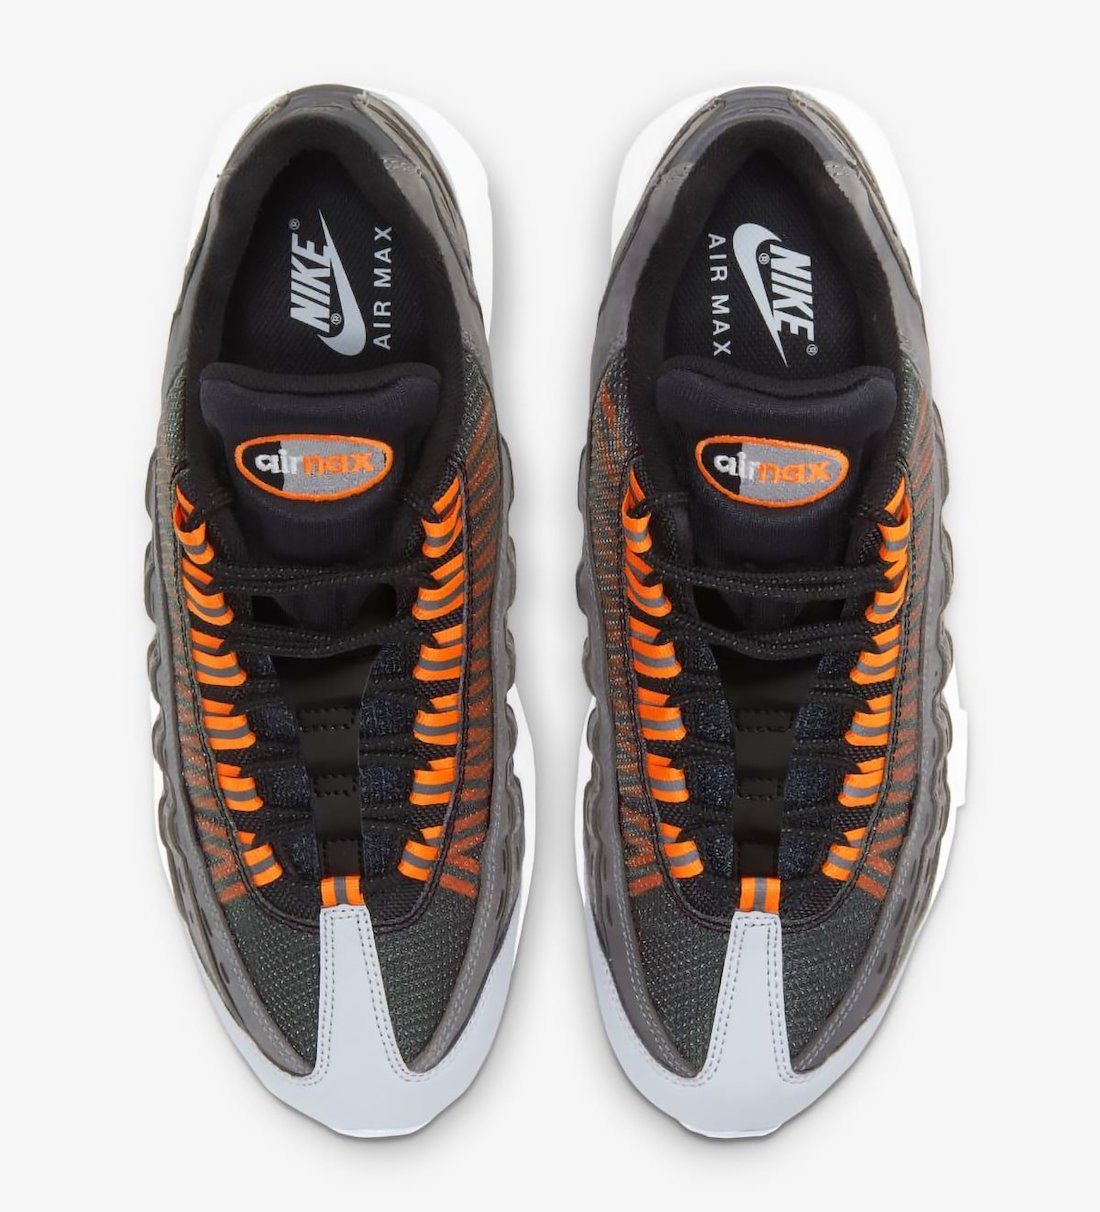 Kim Jones x Nike Air Max 95 Total Orange Debuting Next Week